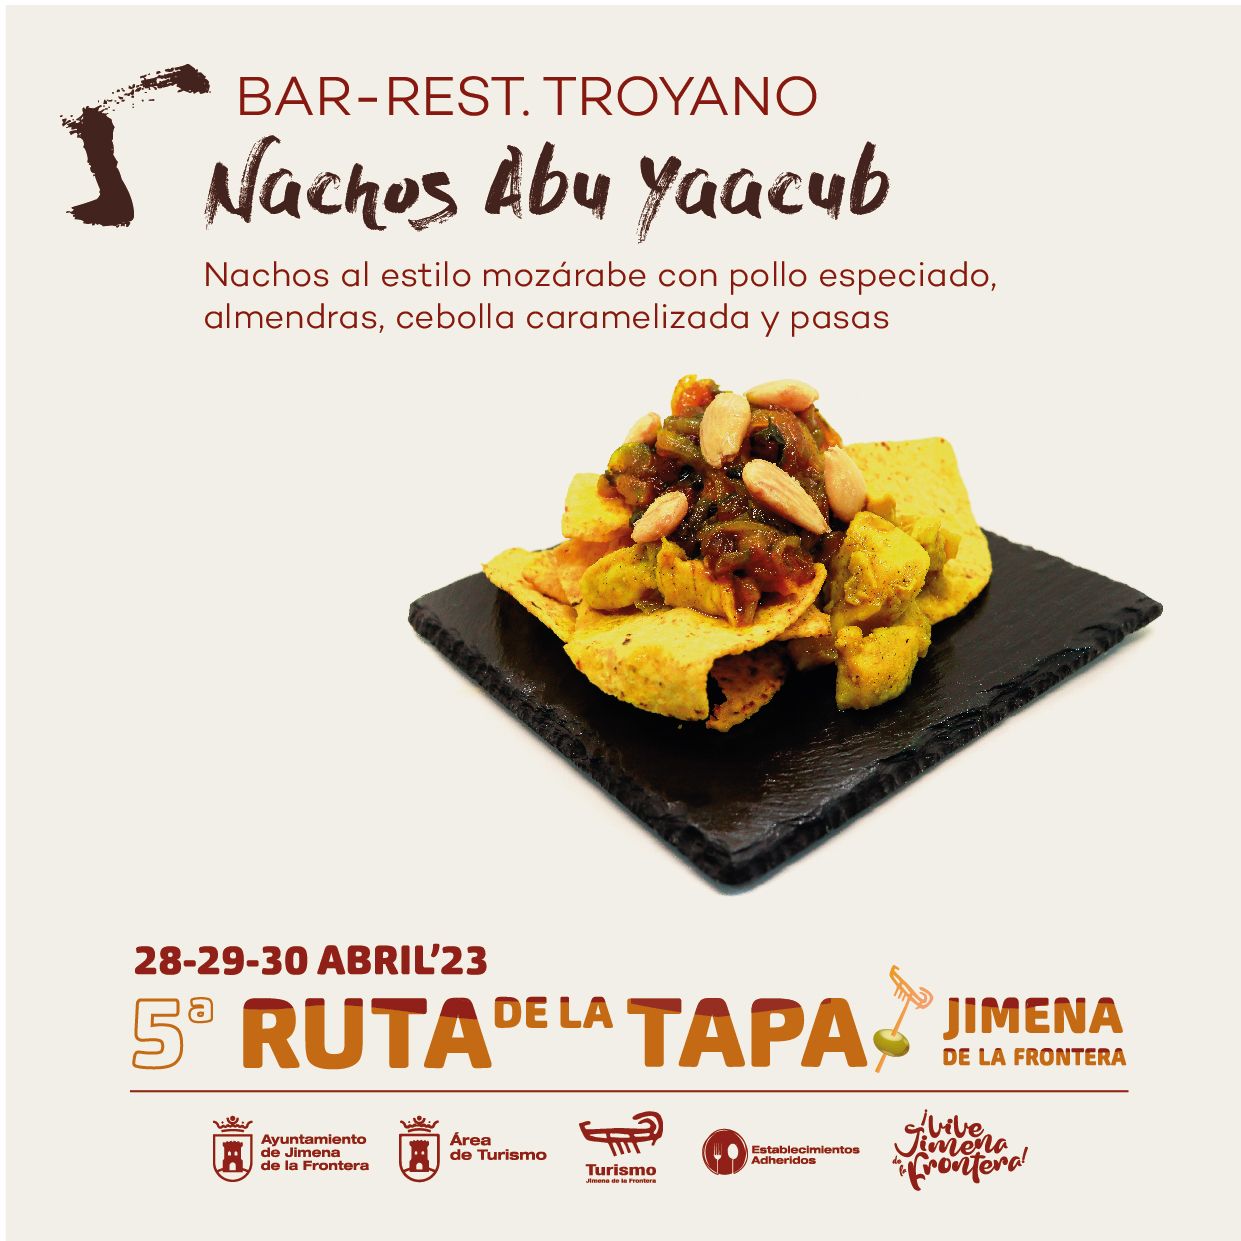 La tapa favorita ha sido la presentada por el Restaurante-Bar Troyano de Jimena de la Frontera.